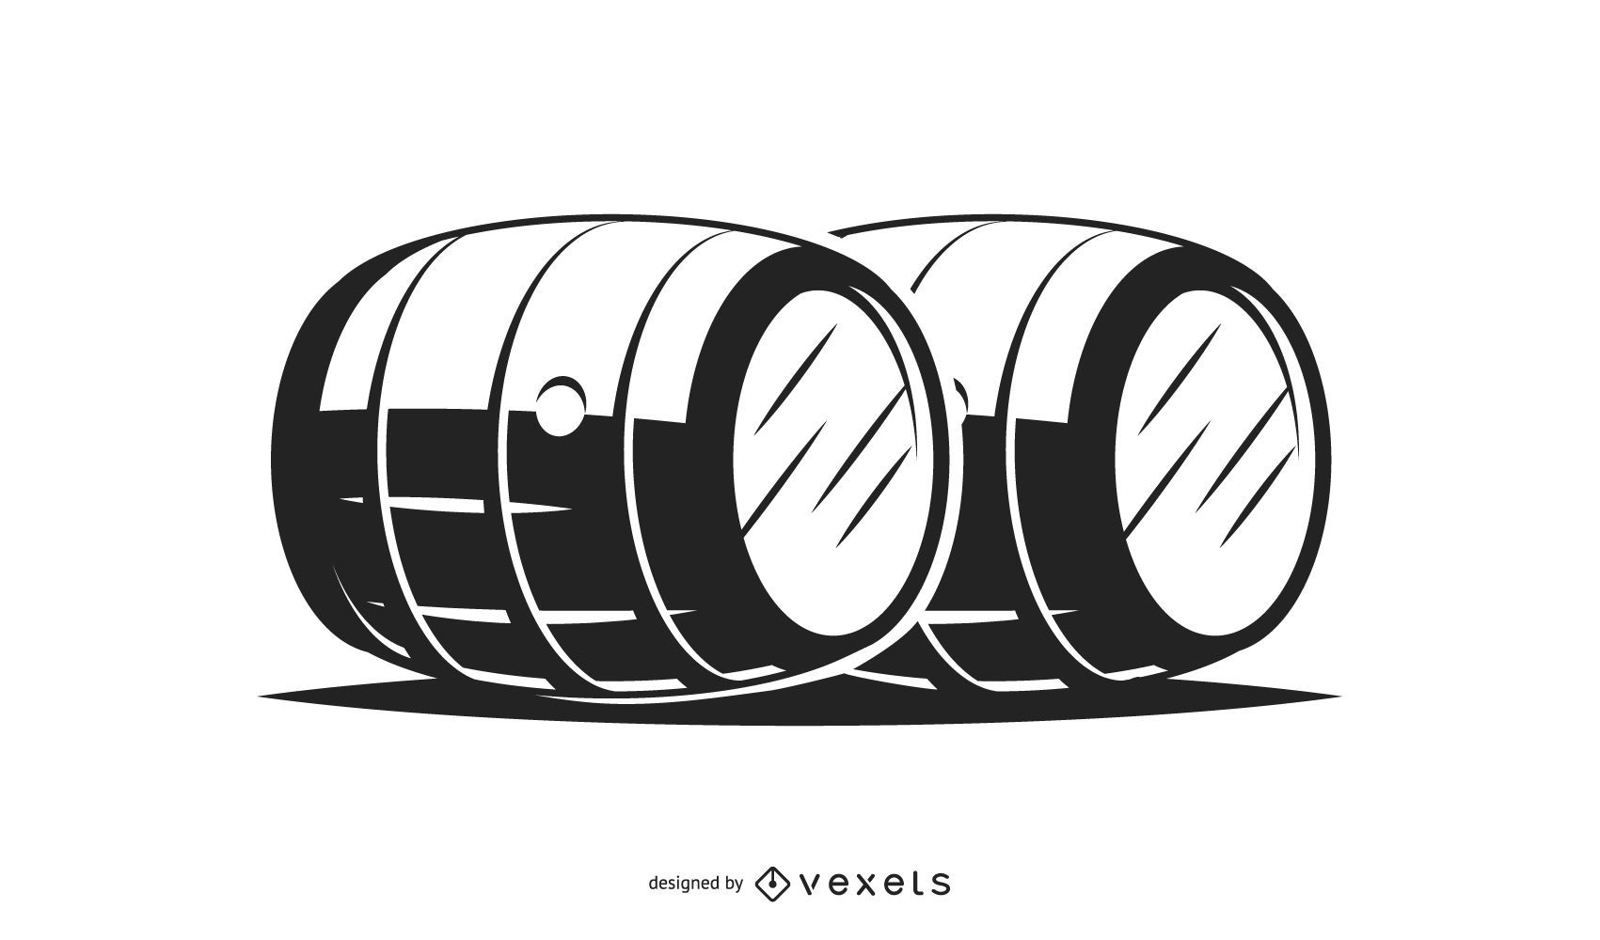 Wooden barrels illustration